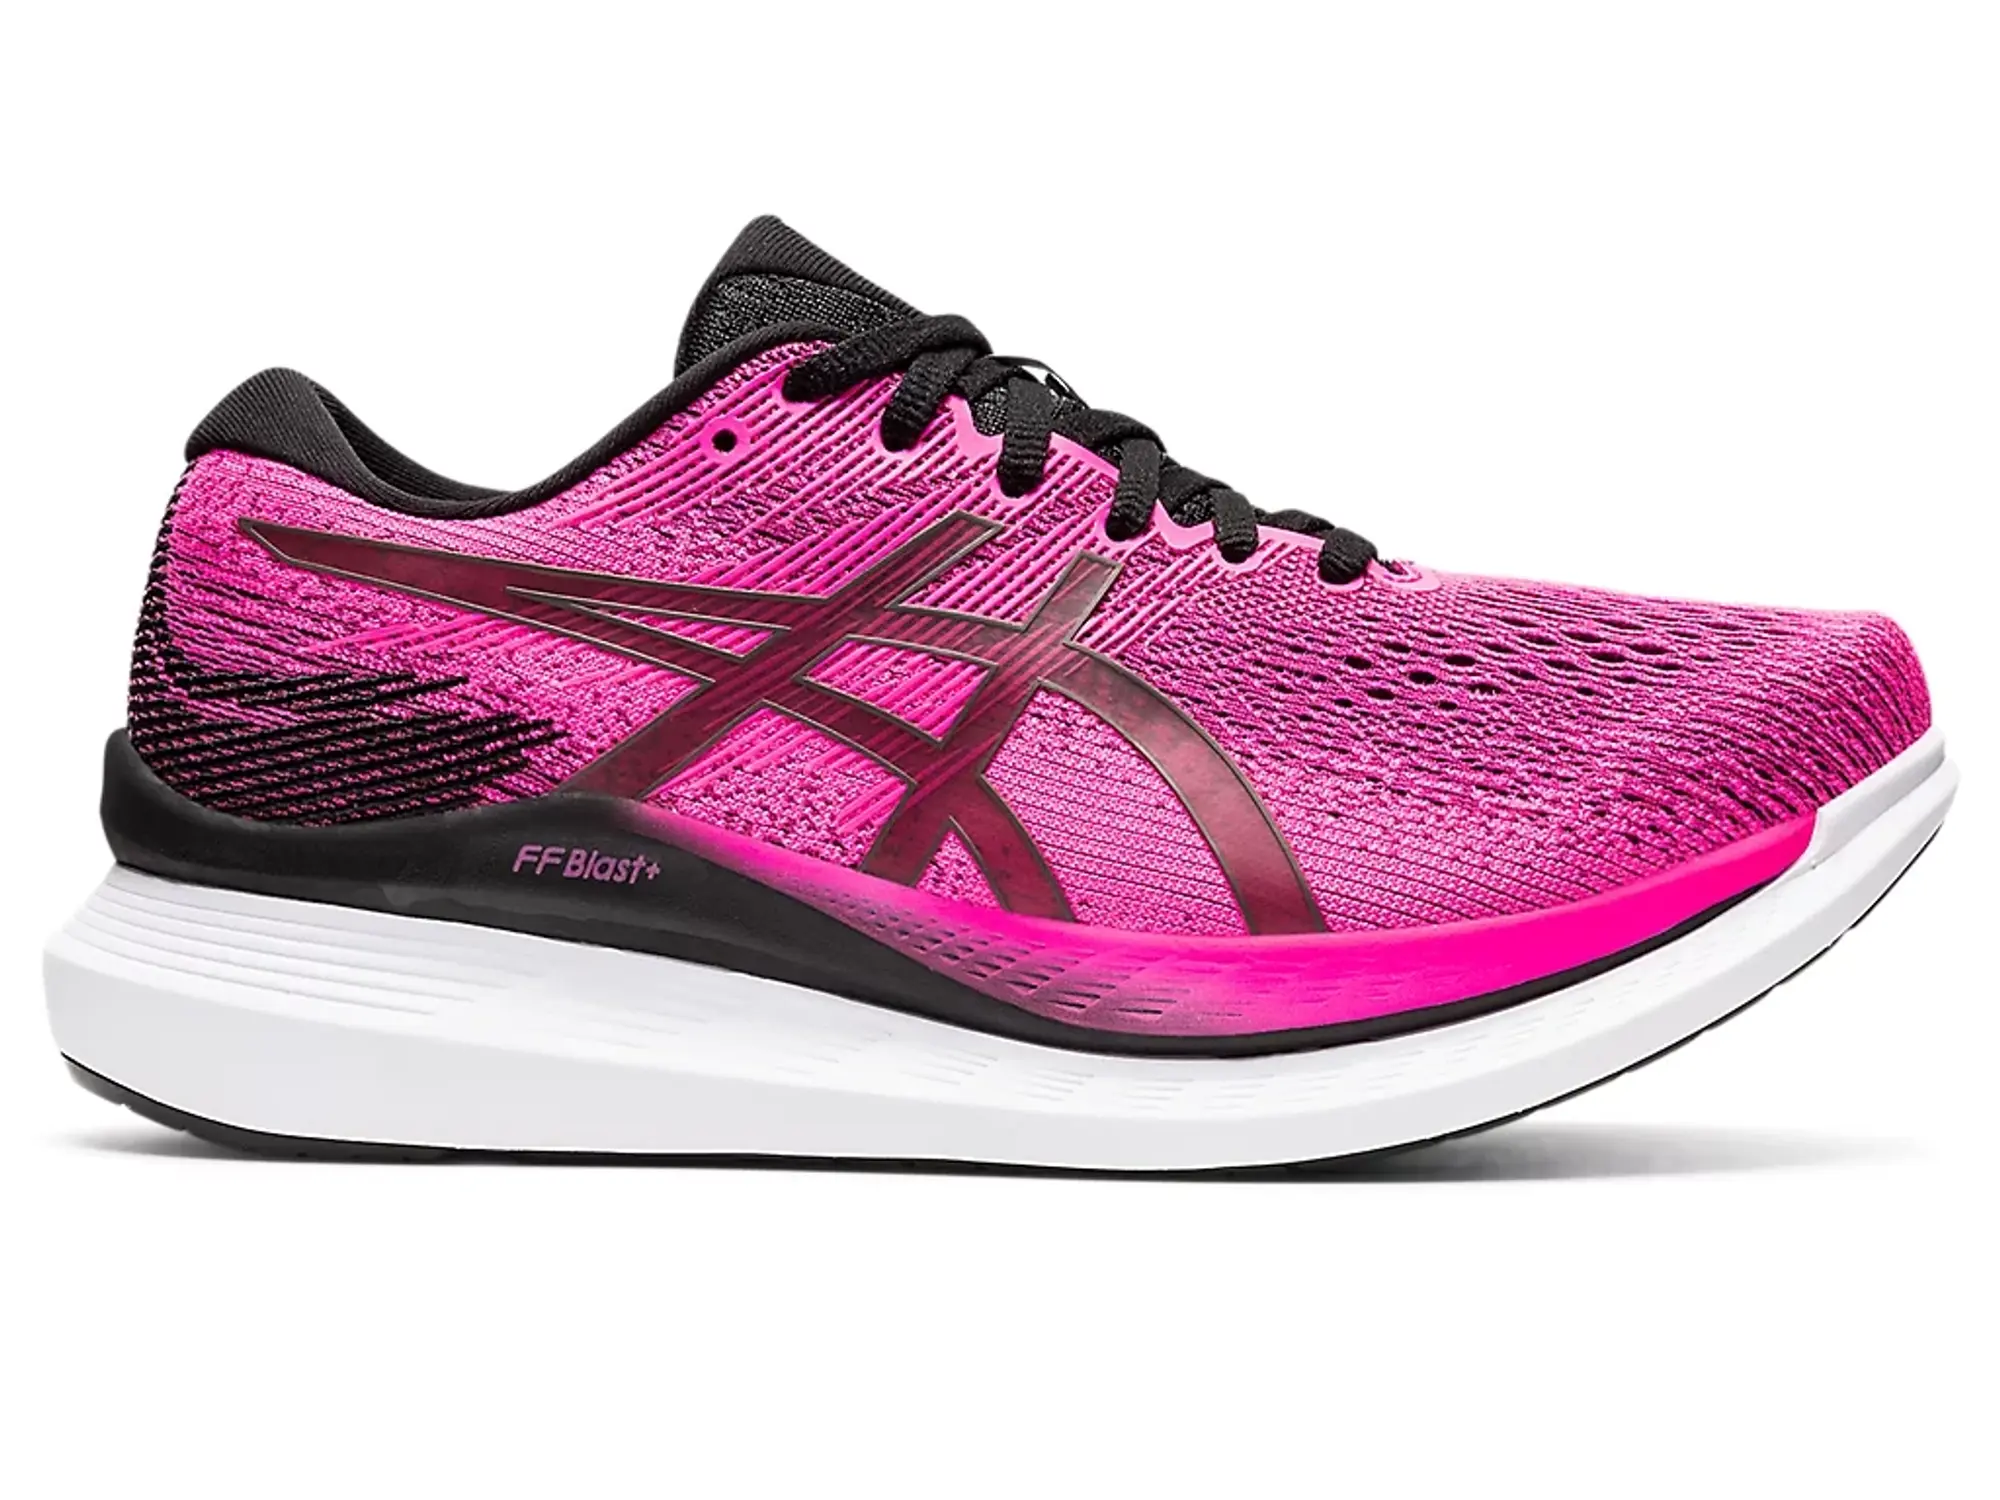 ASICS Glideride 3 Neutral Running Shoe Women - Pink, Black